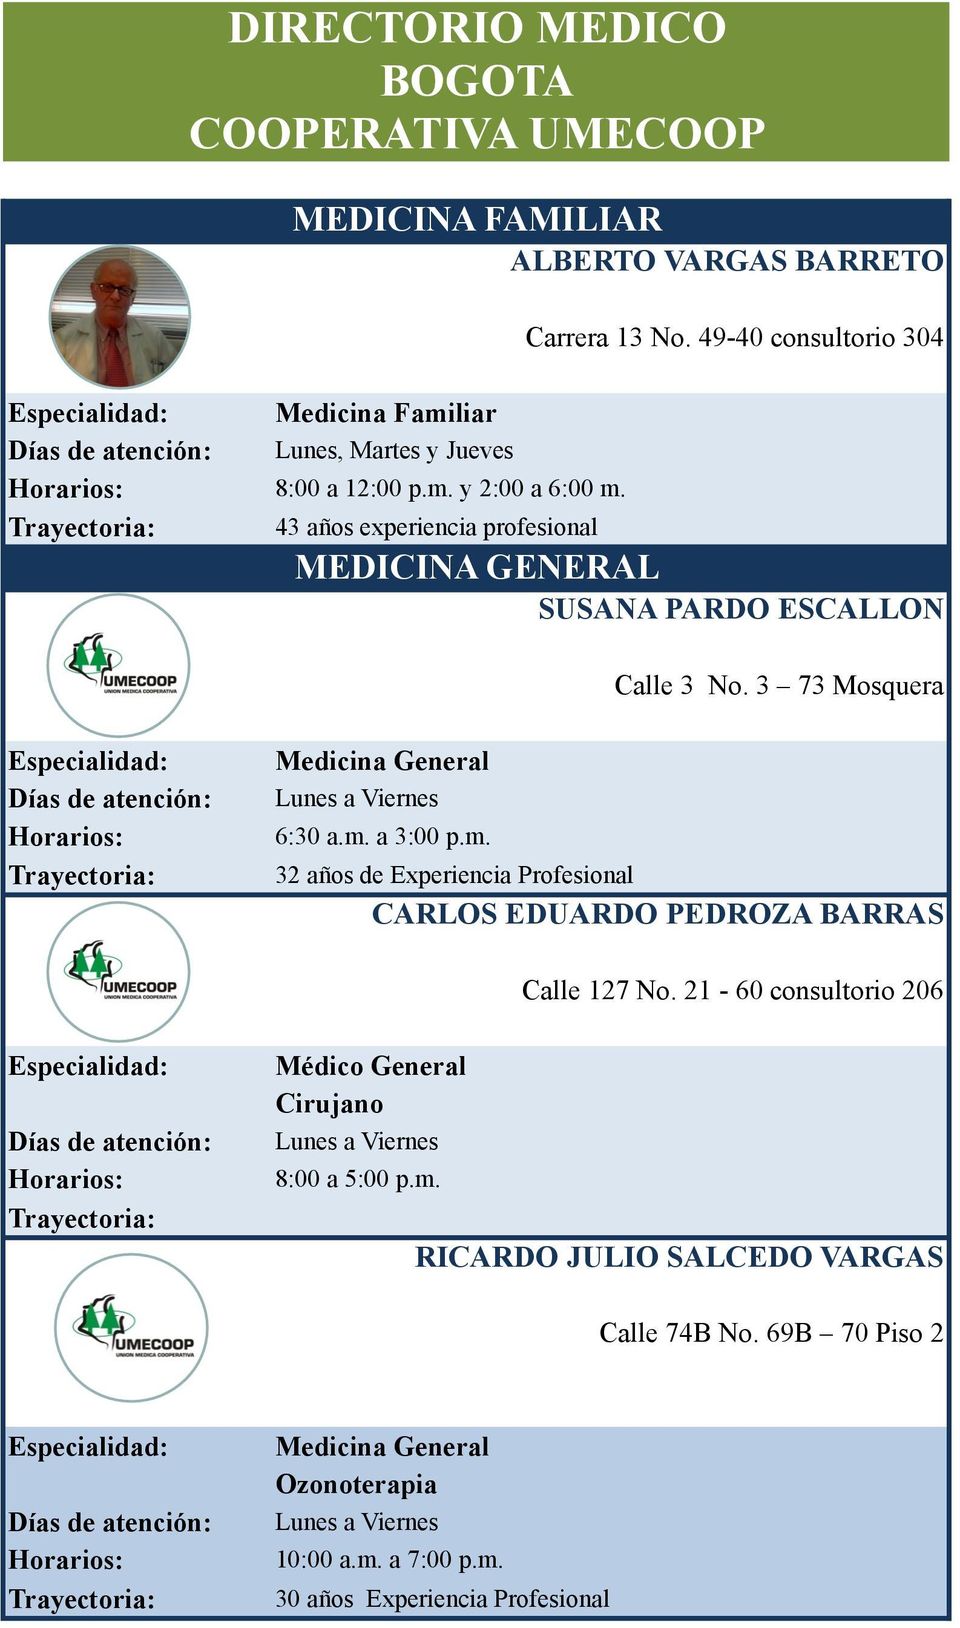 3 73 Mosquera Medicina General 6:30 a.m. a 3:00 p.m. 32 años de Experiencia Profesional CARLOS EDUARDO PEDROZA BARRAS Calle 127 No.